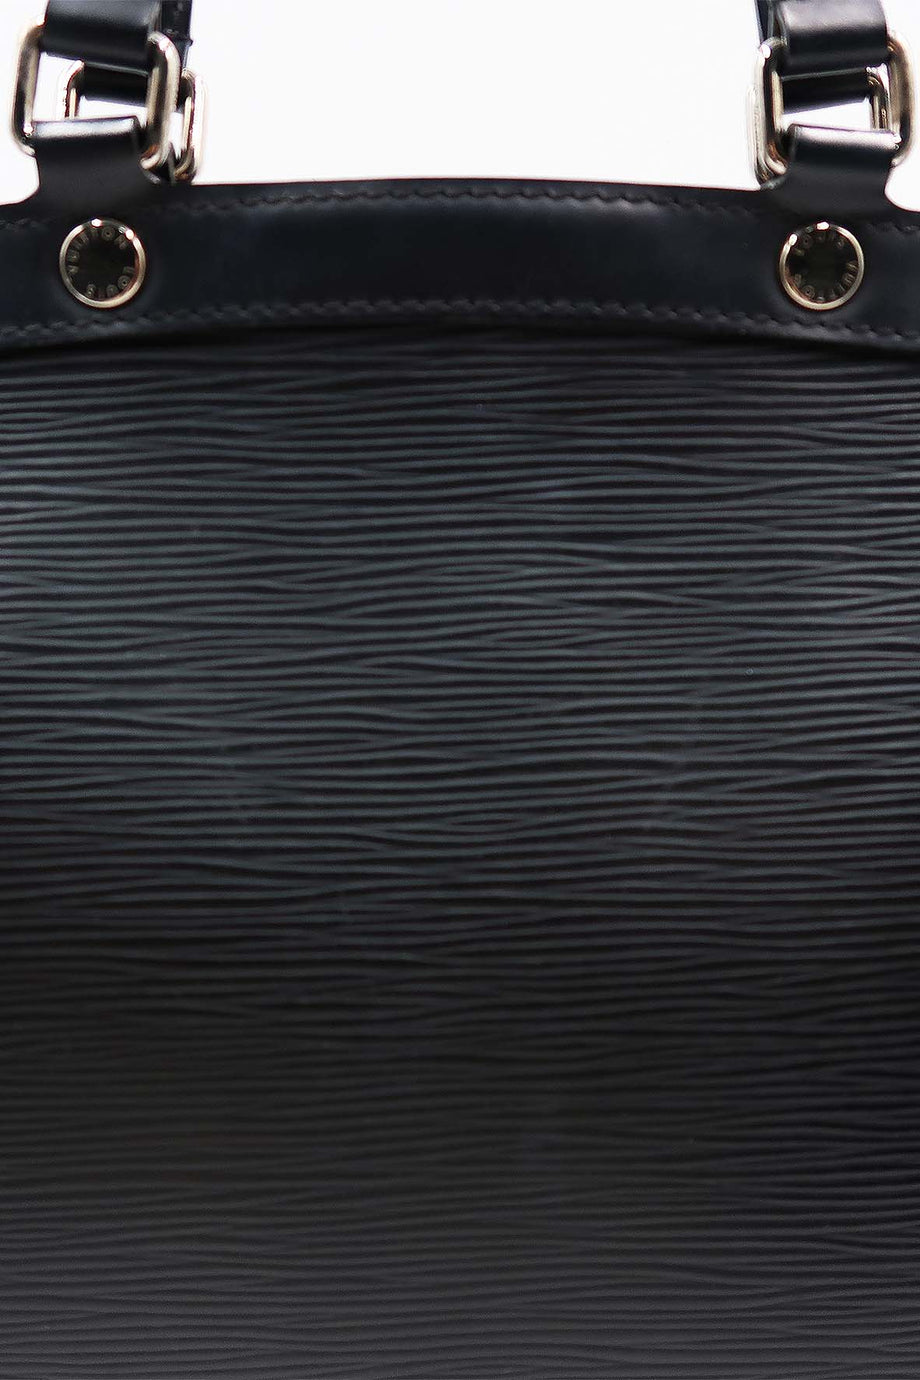 Louis Vuitton Brea Handbag Epi Leather MM Black 22911429